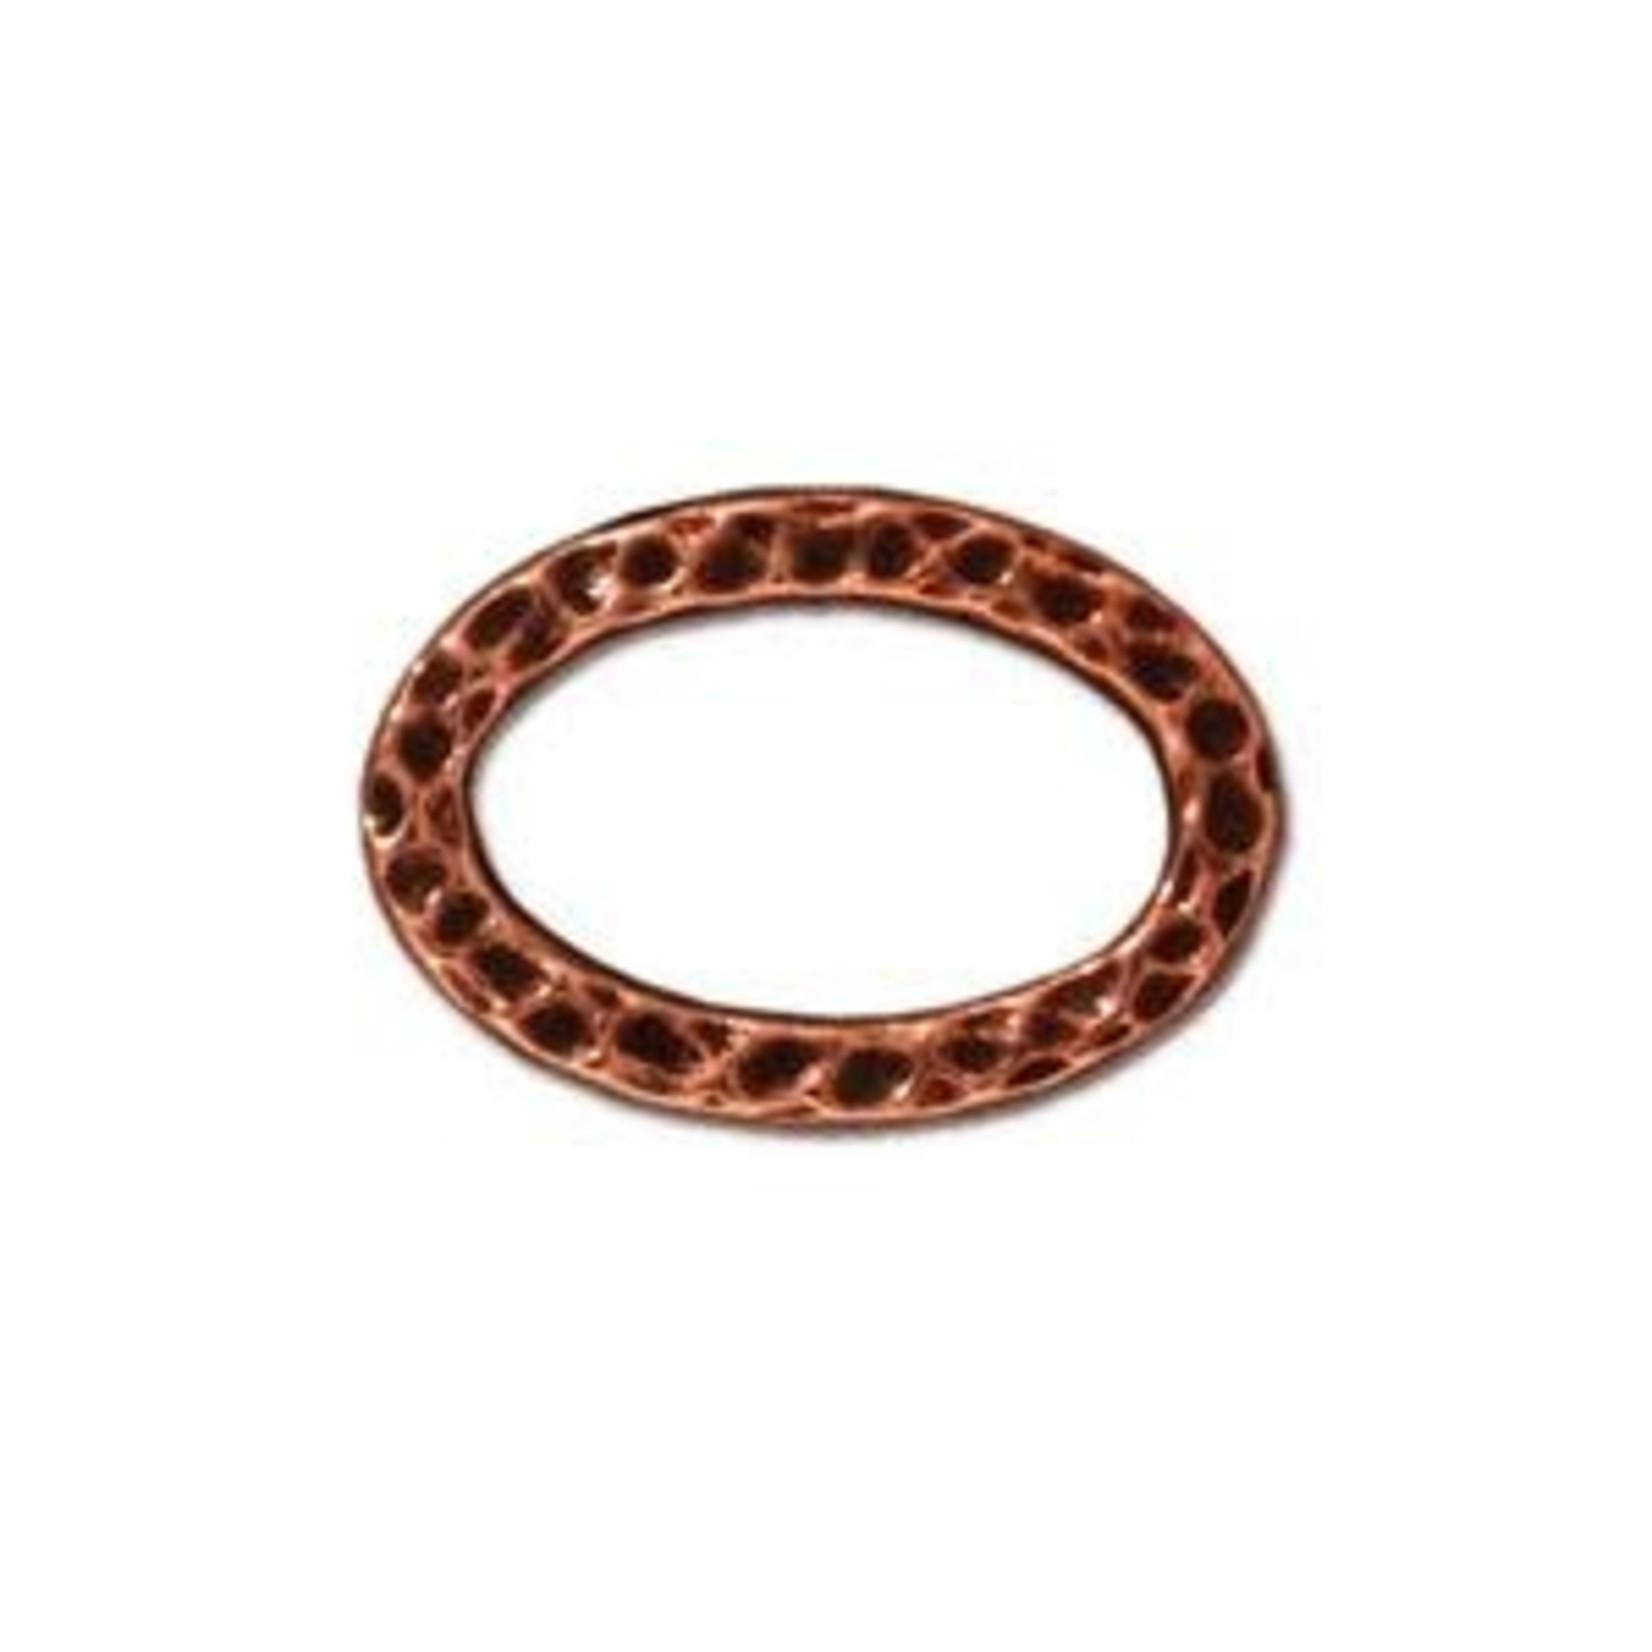 TierraCast Tierracast Antique Copper Plated Hammertone Oval Ring